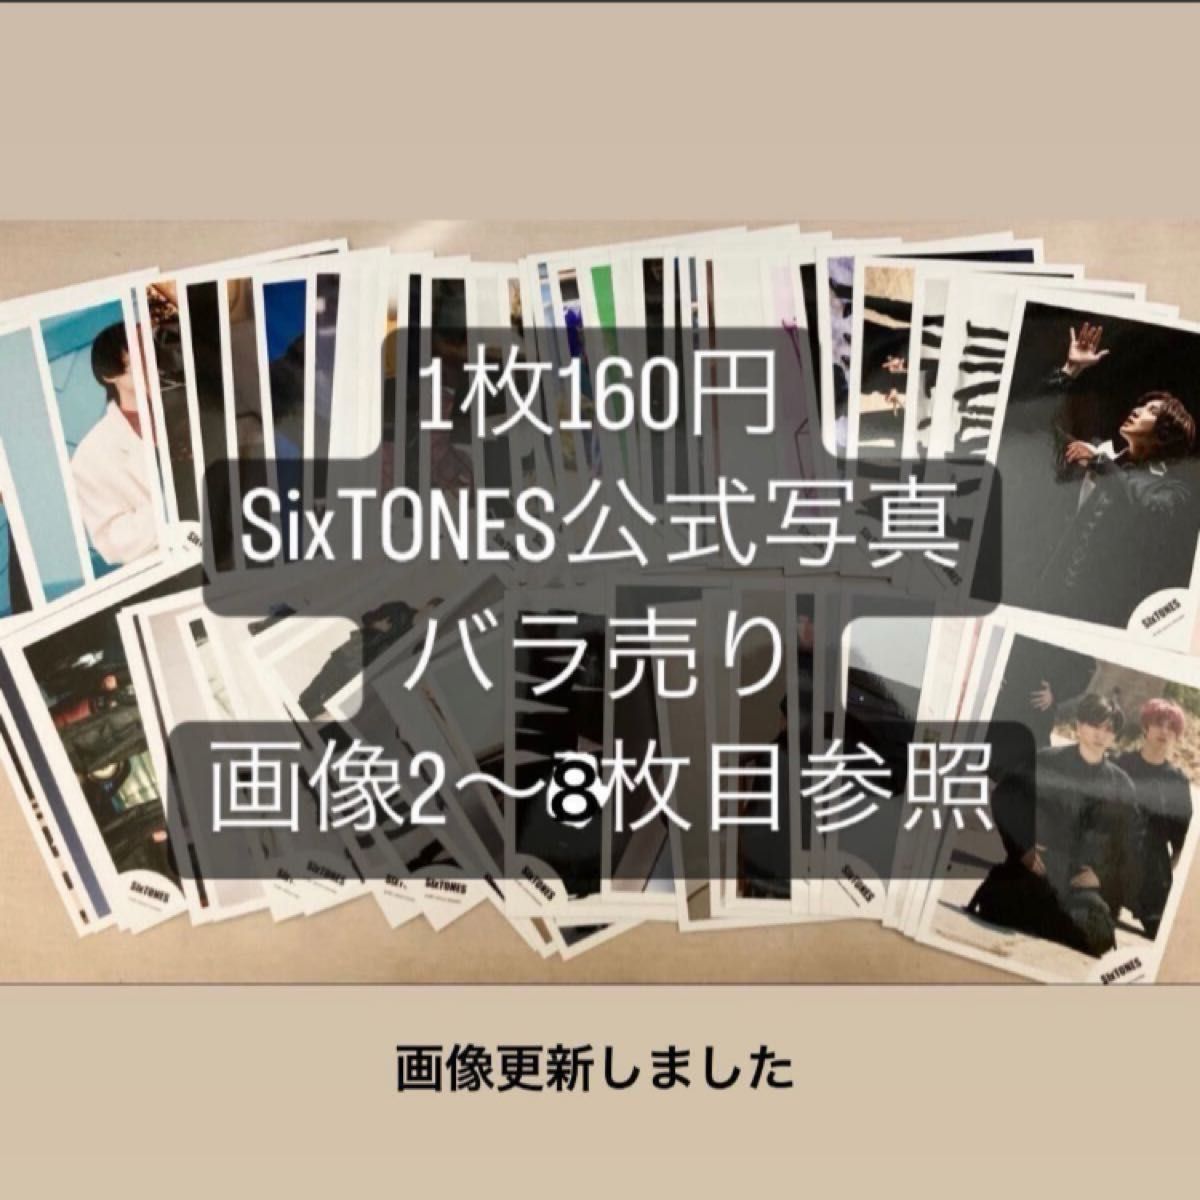 SixTONES 公式写真 バラ売り 集合ペア個人